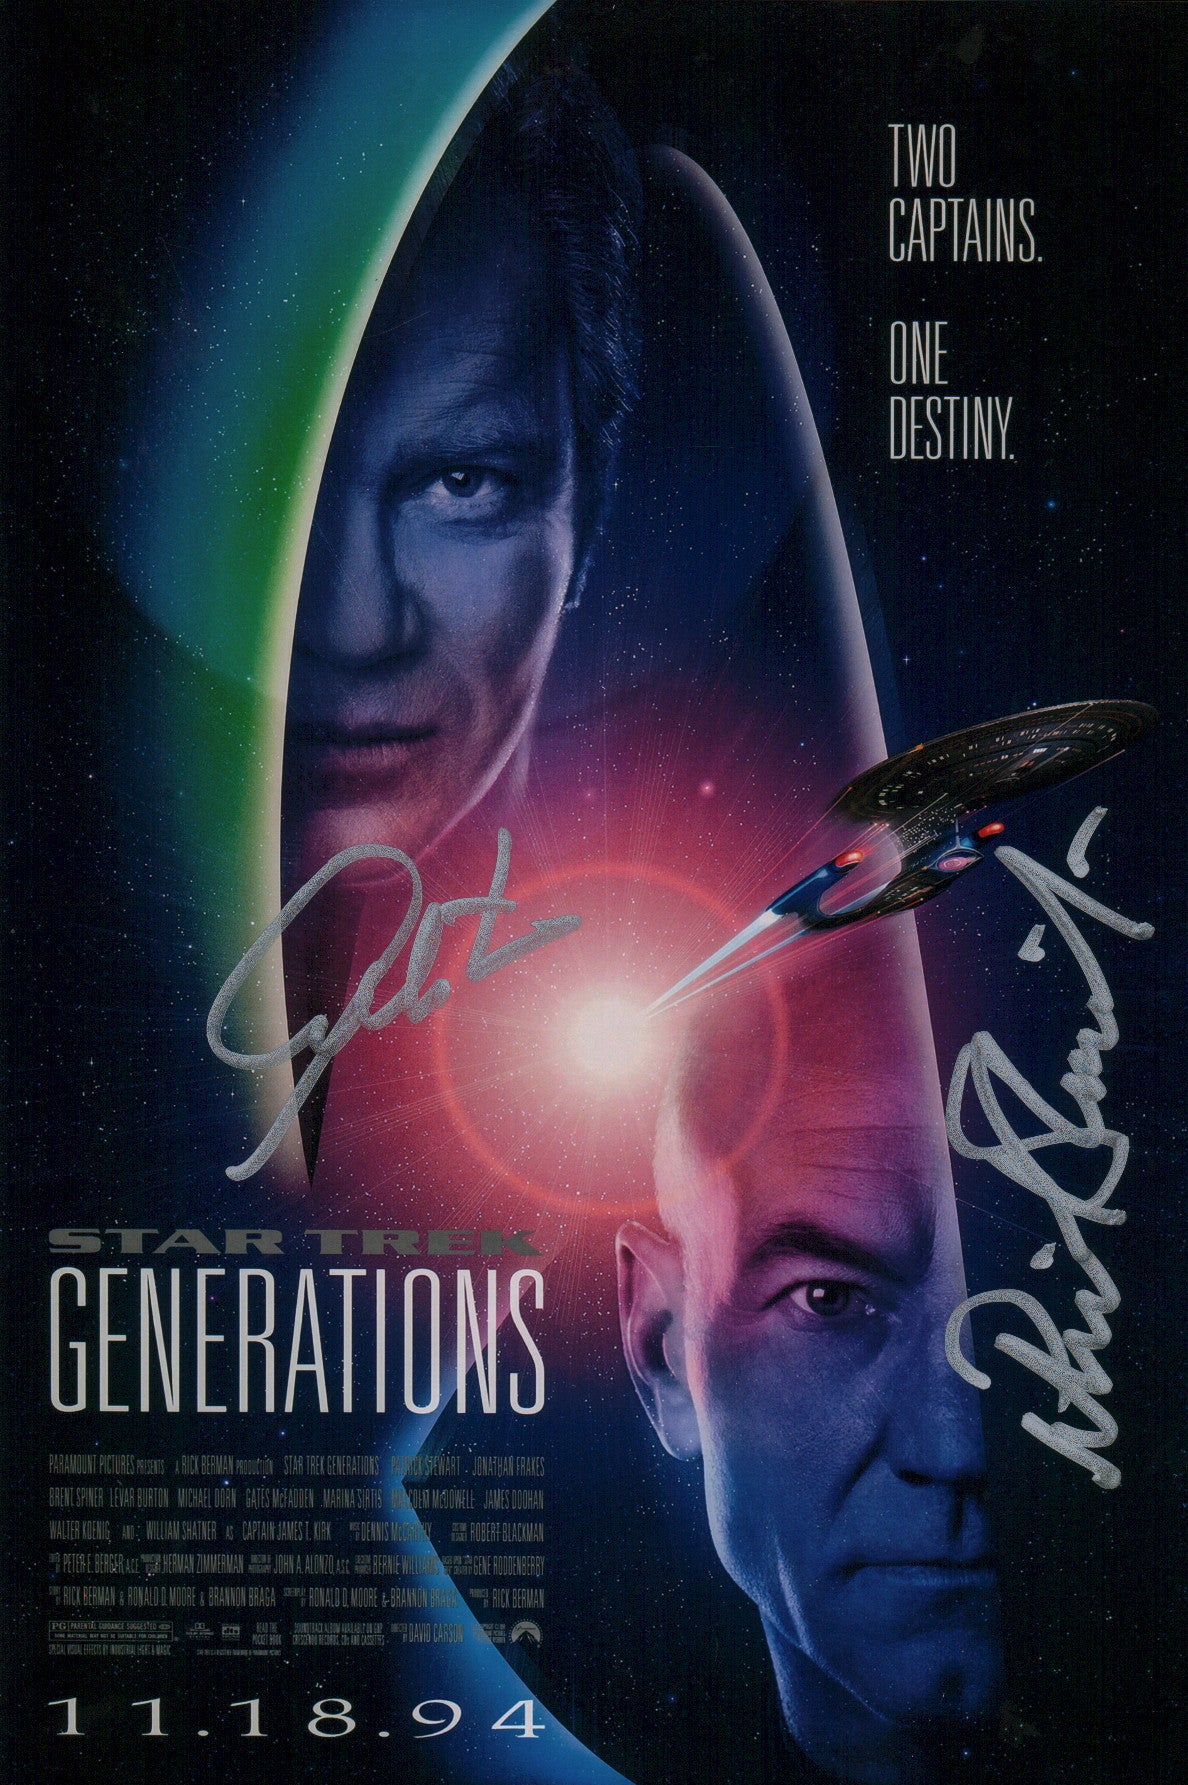 Star Trek Generations 8x12 Photo Cast x2 Signed Shatner, Stewart JSA Certified Autograph